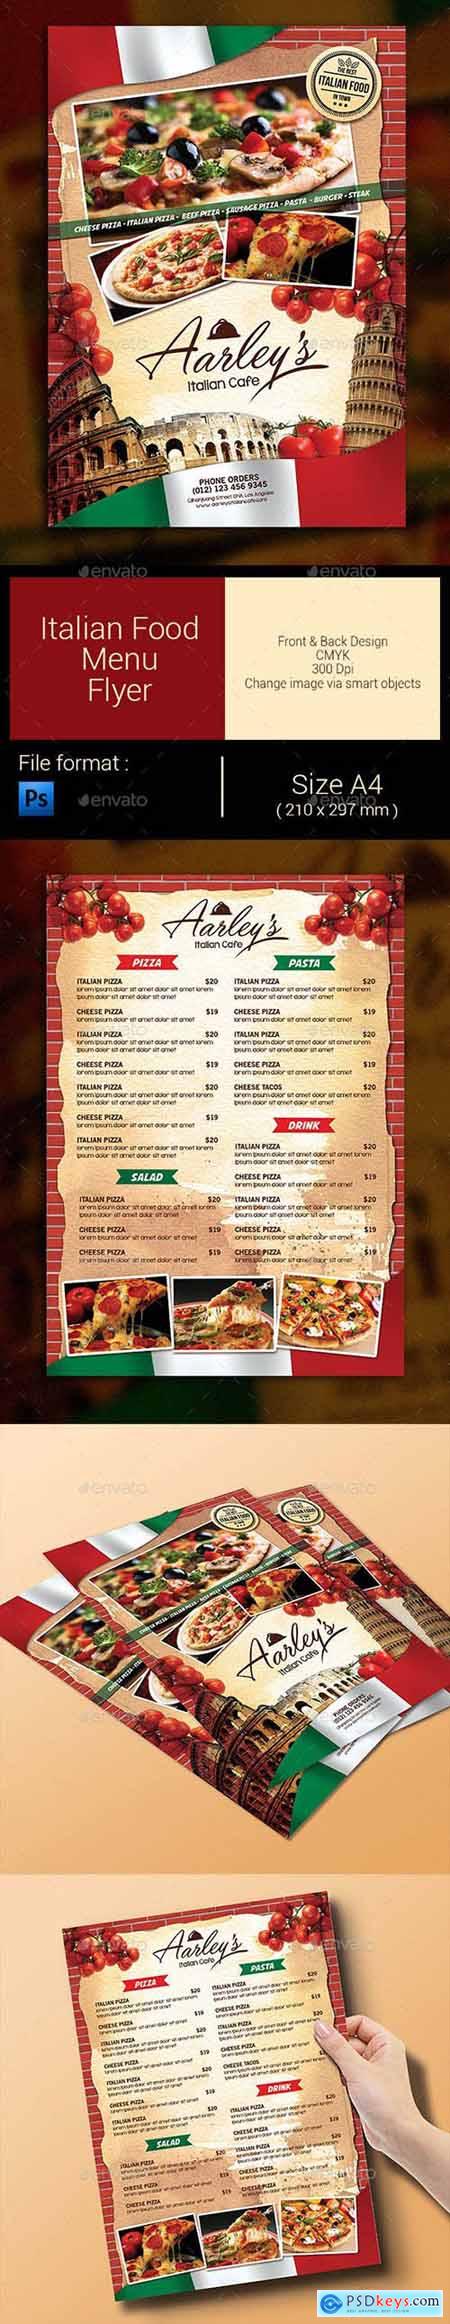 Graphicriver Italian Food Menu Flyer